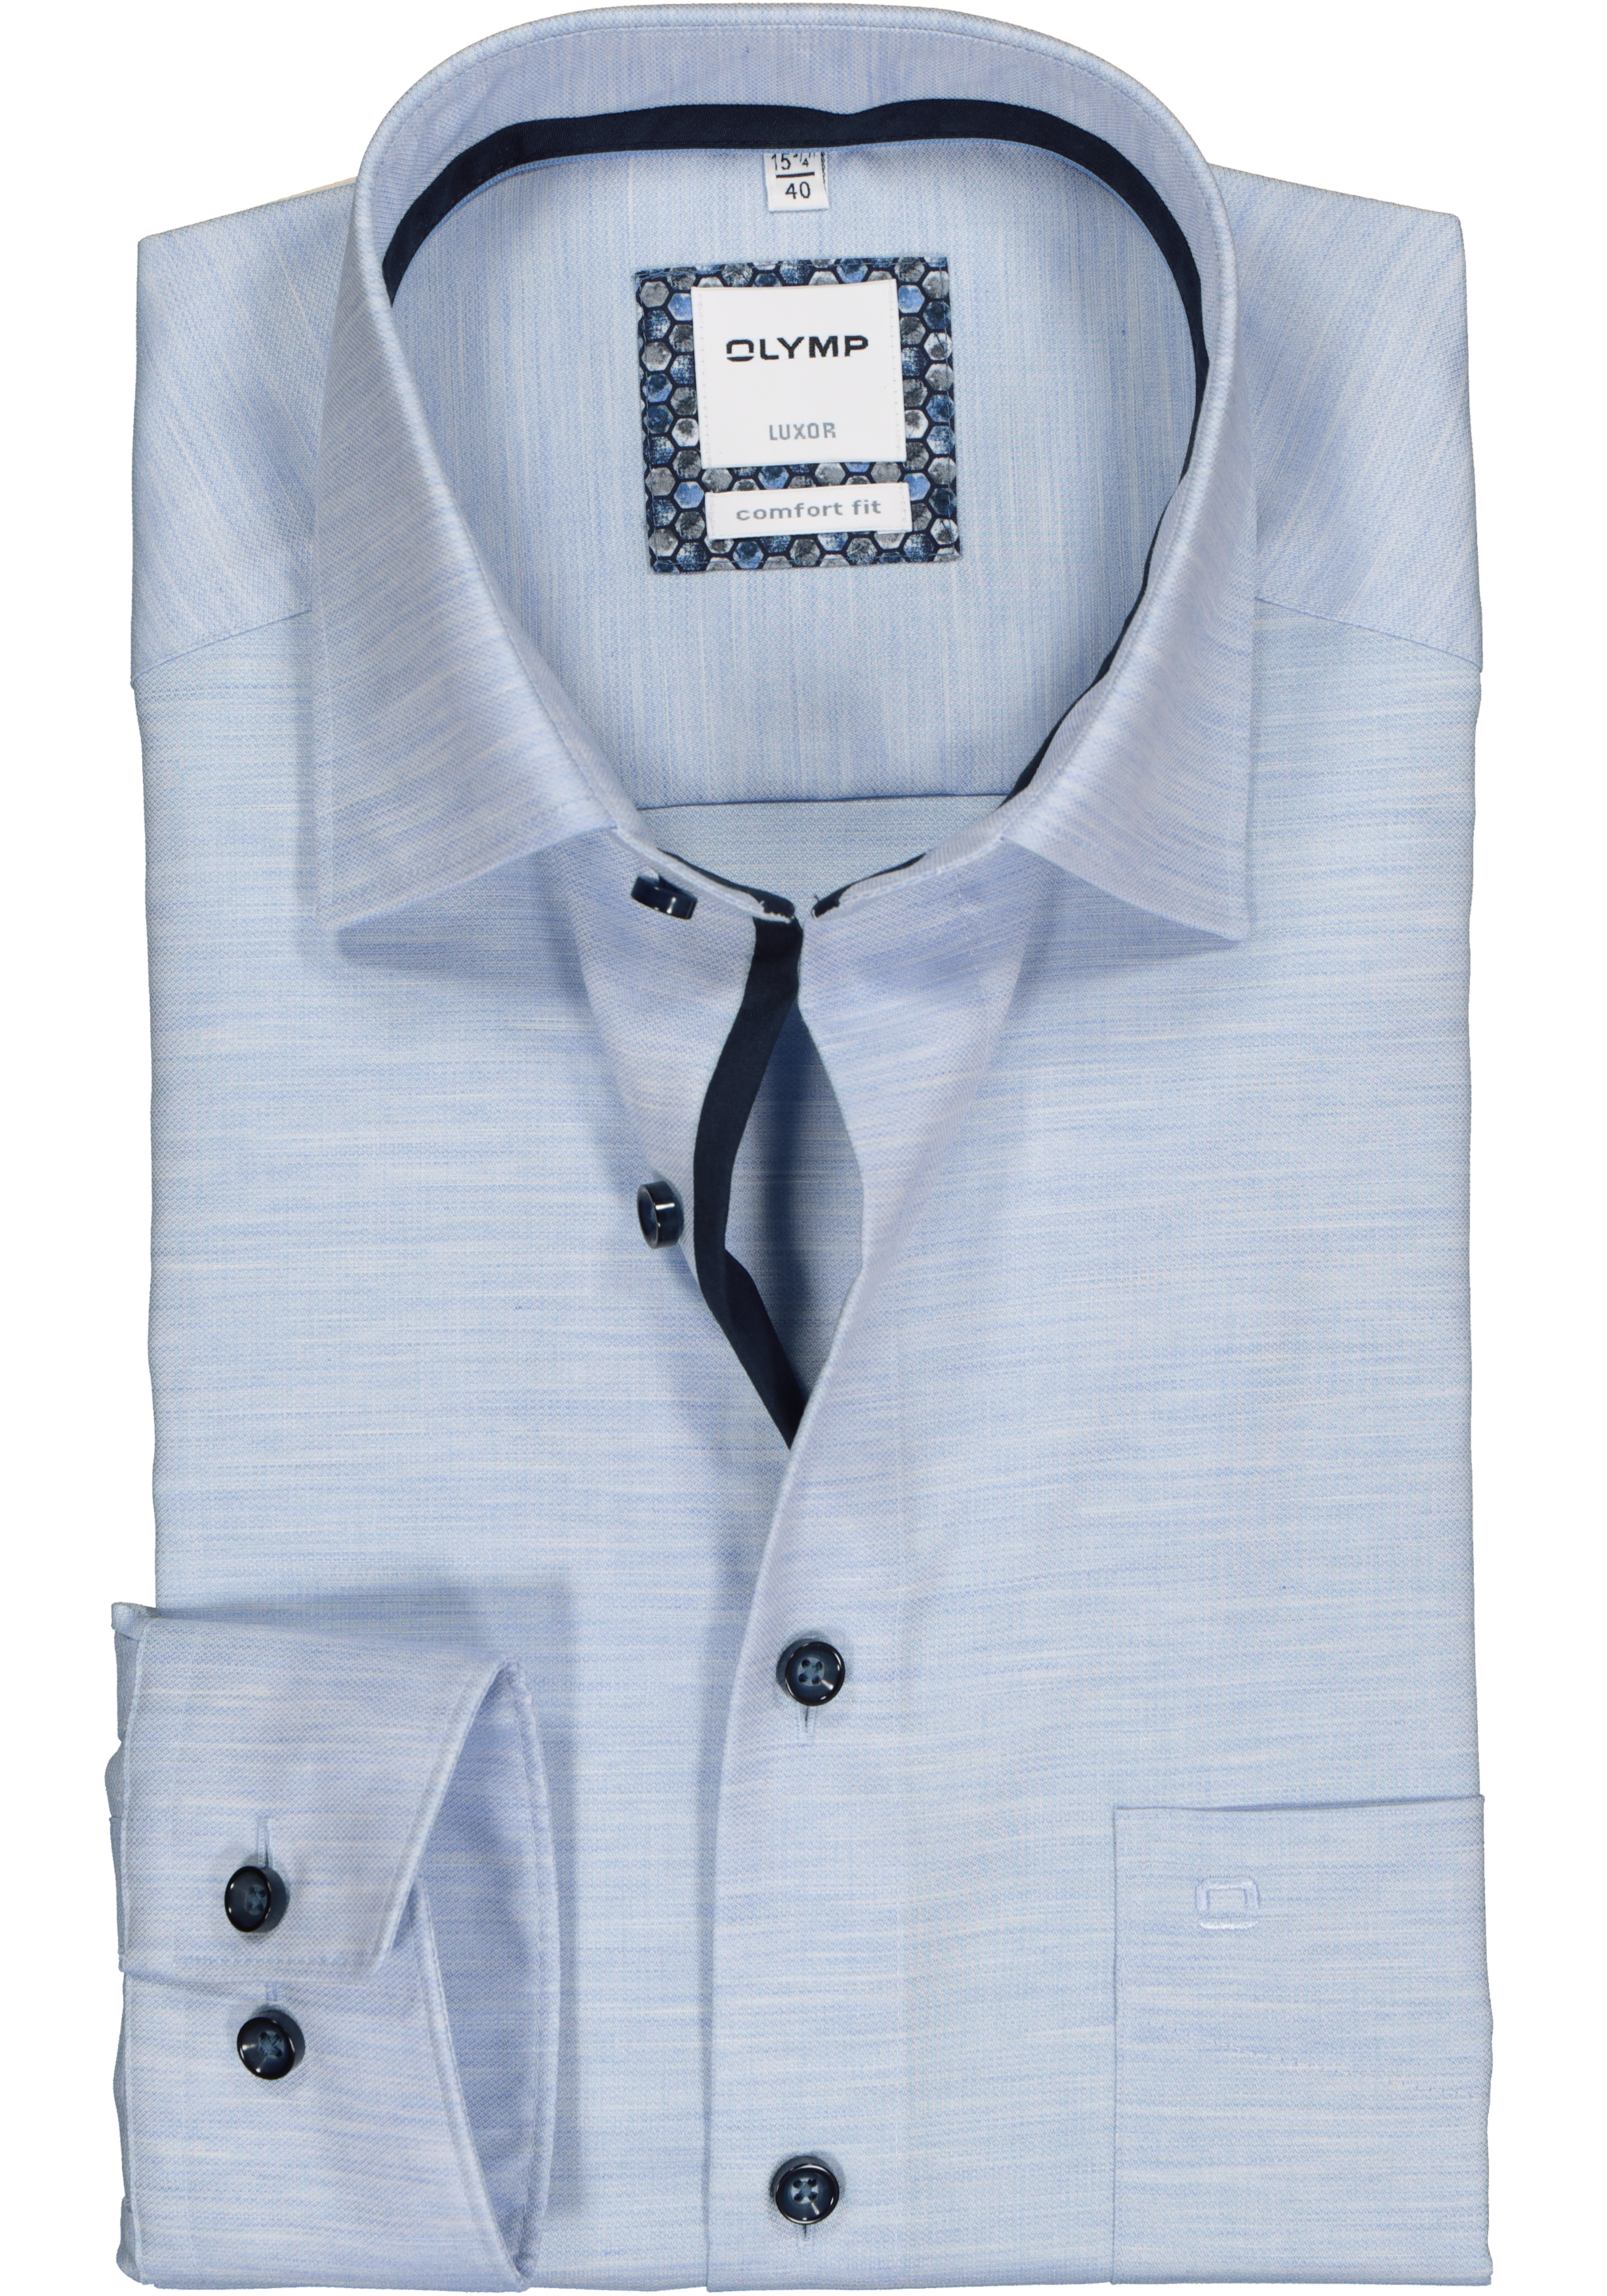 OLYMP Luxor comfort fit overhemd, mouwlengte 7, lichtblauw structuur (contrast)